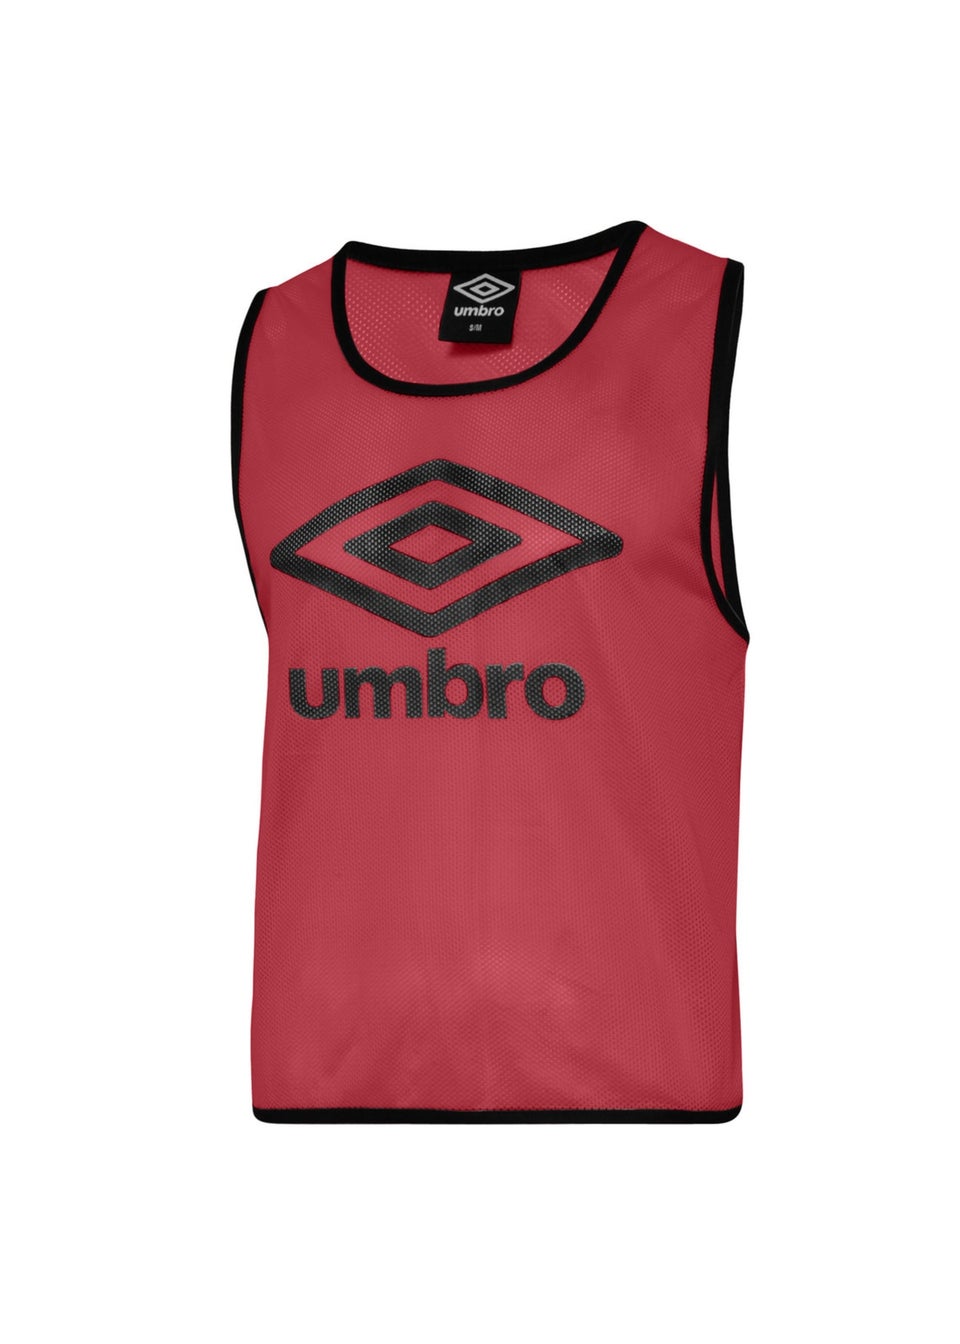 Umbro Kids Black/Red Training Bib